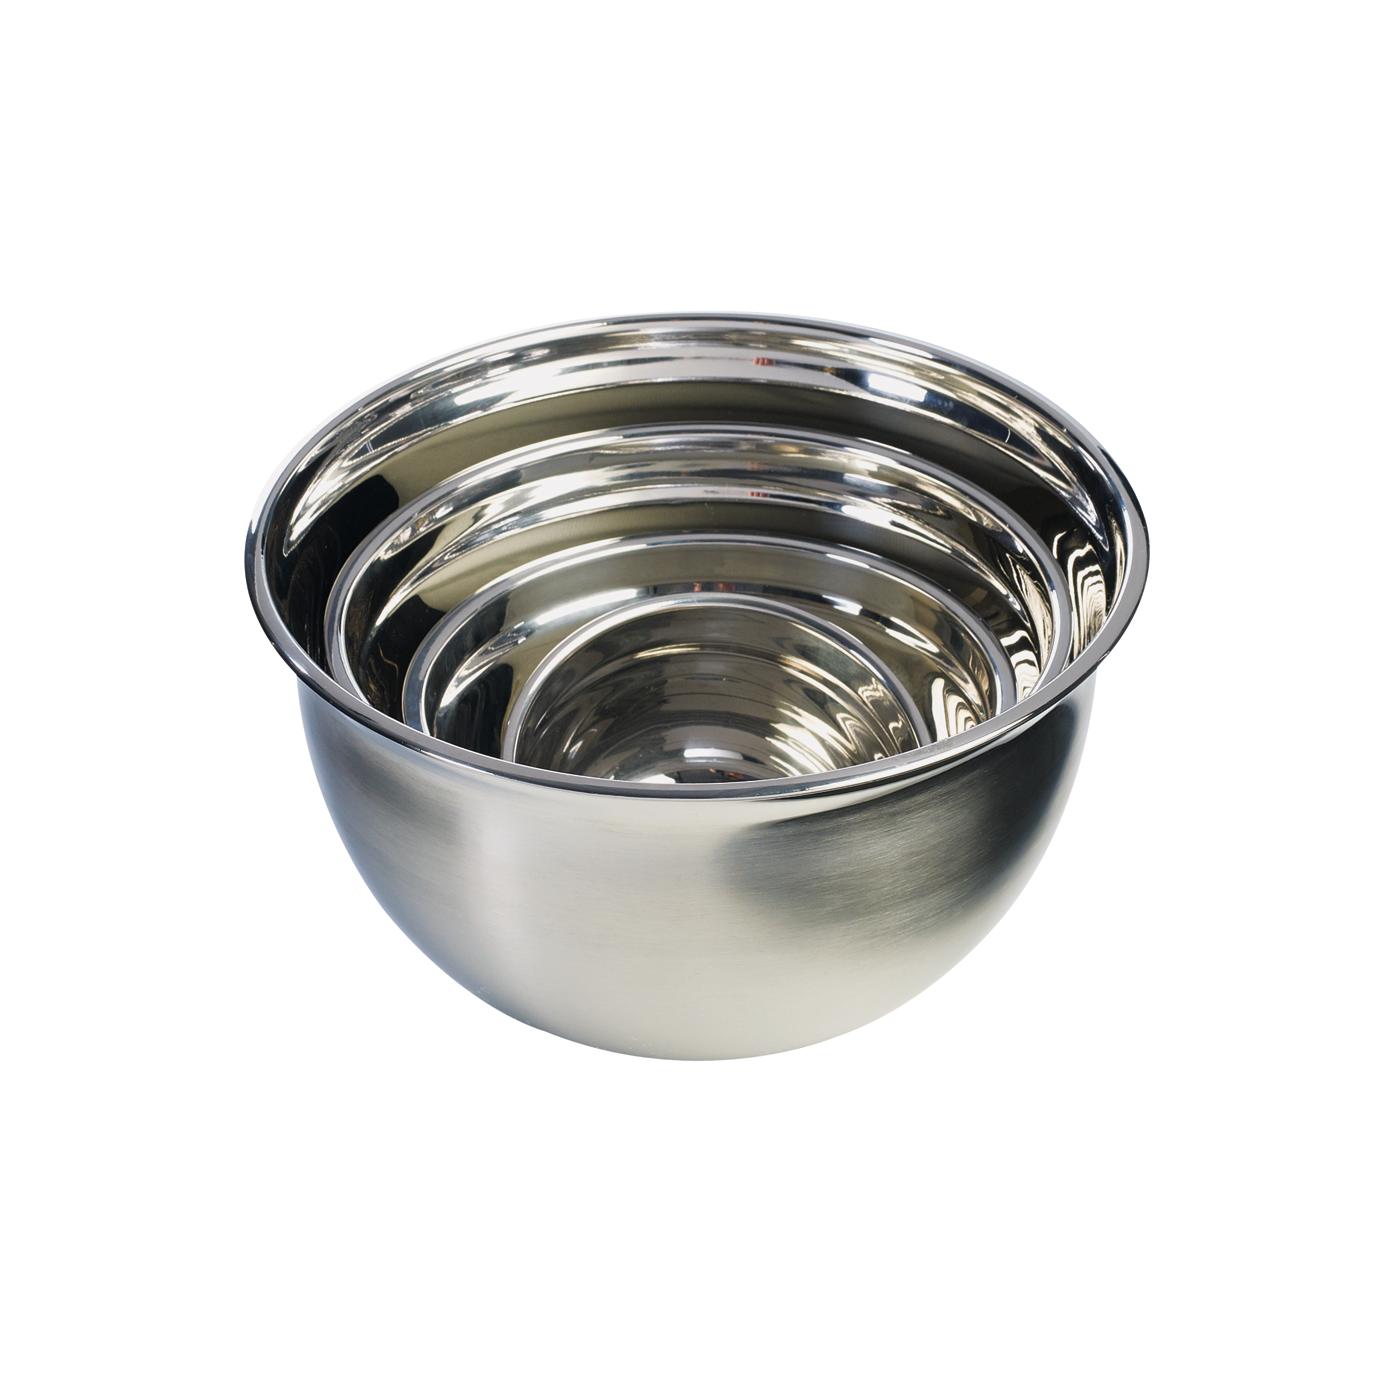 Inox Kitchenware Stainless Steel Mixing Bowl Set; image 1 of 2